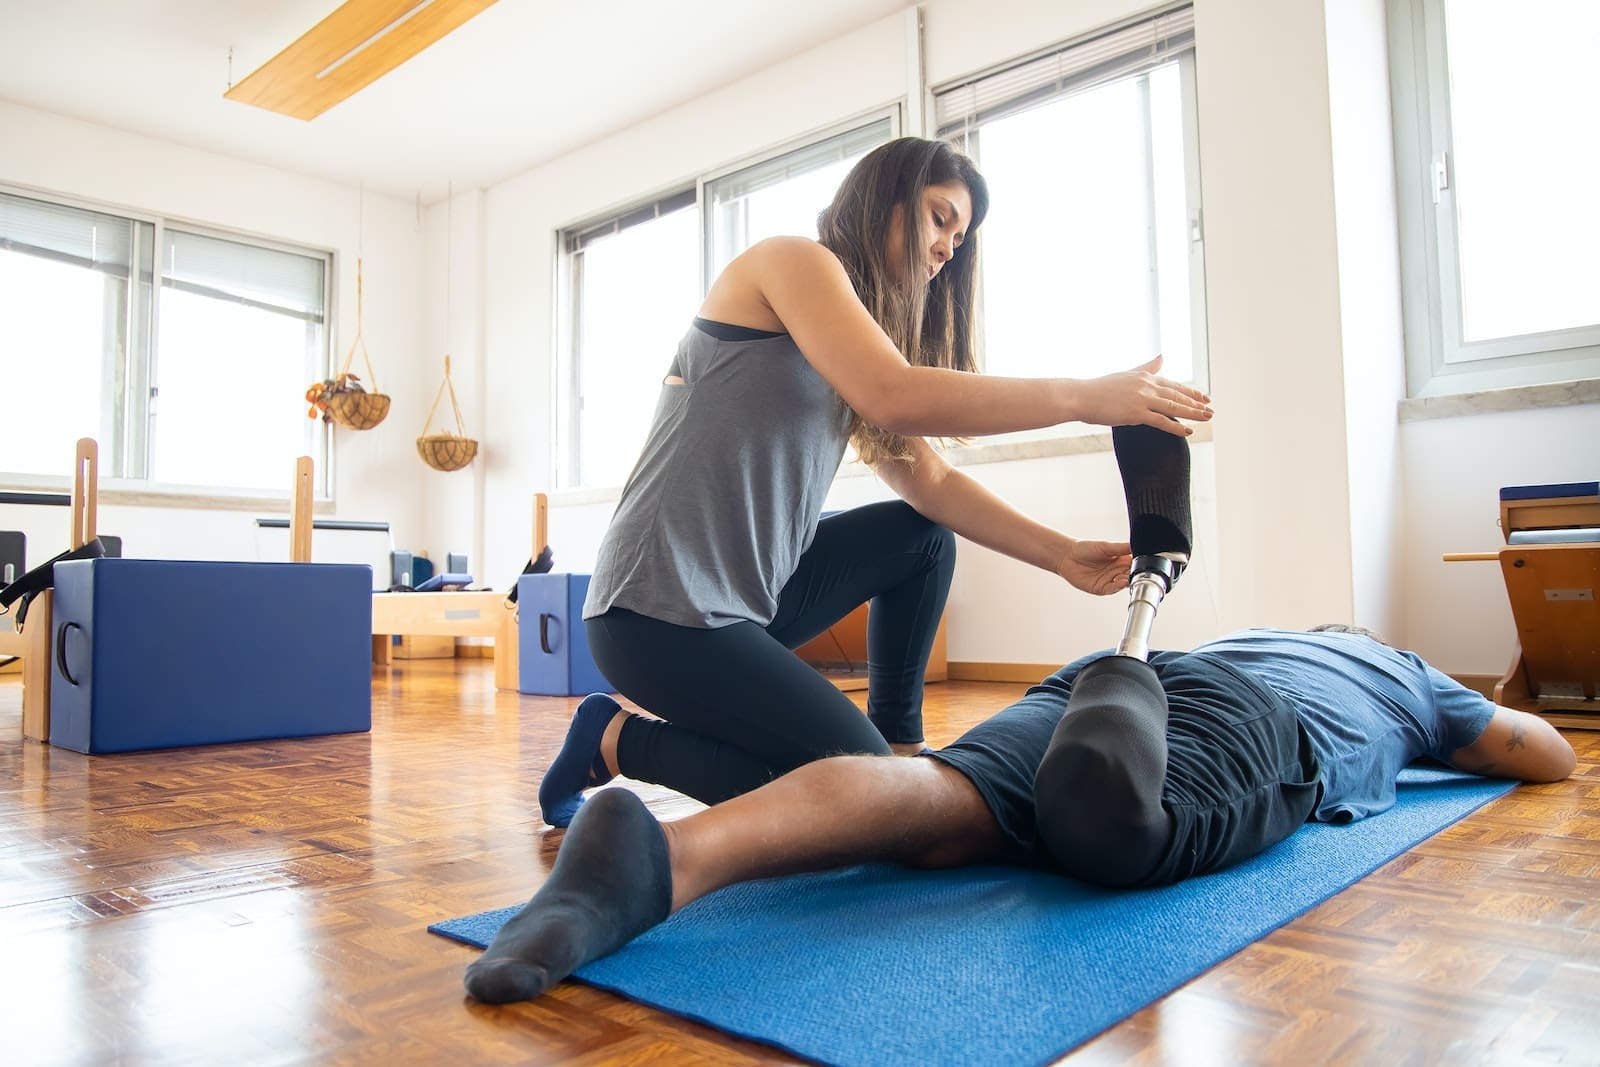 Woman in Gray Tank Top and Black Leggings Doing Yoga